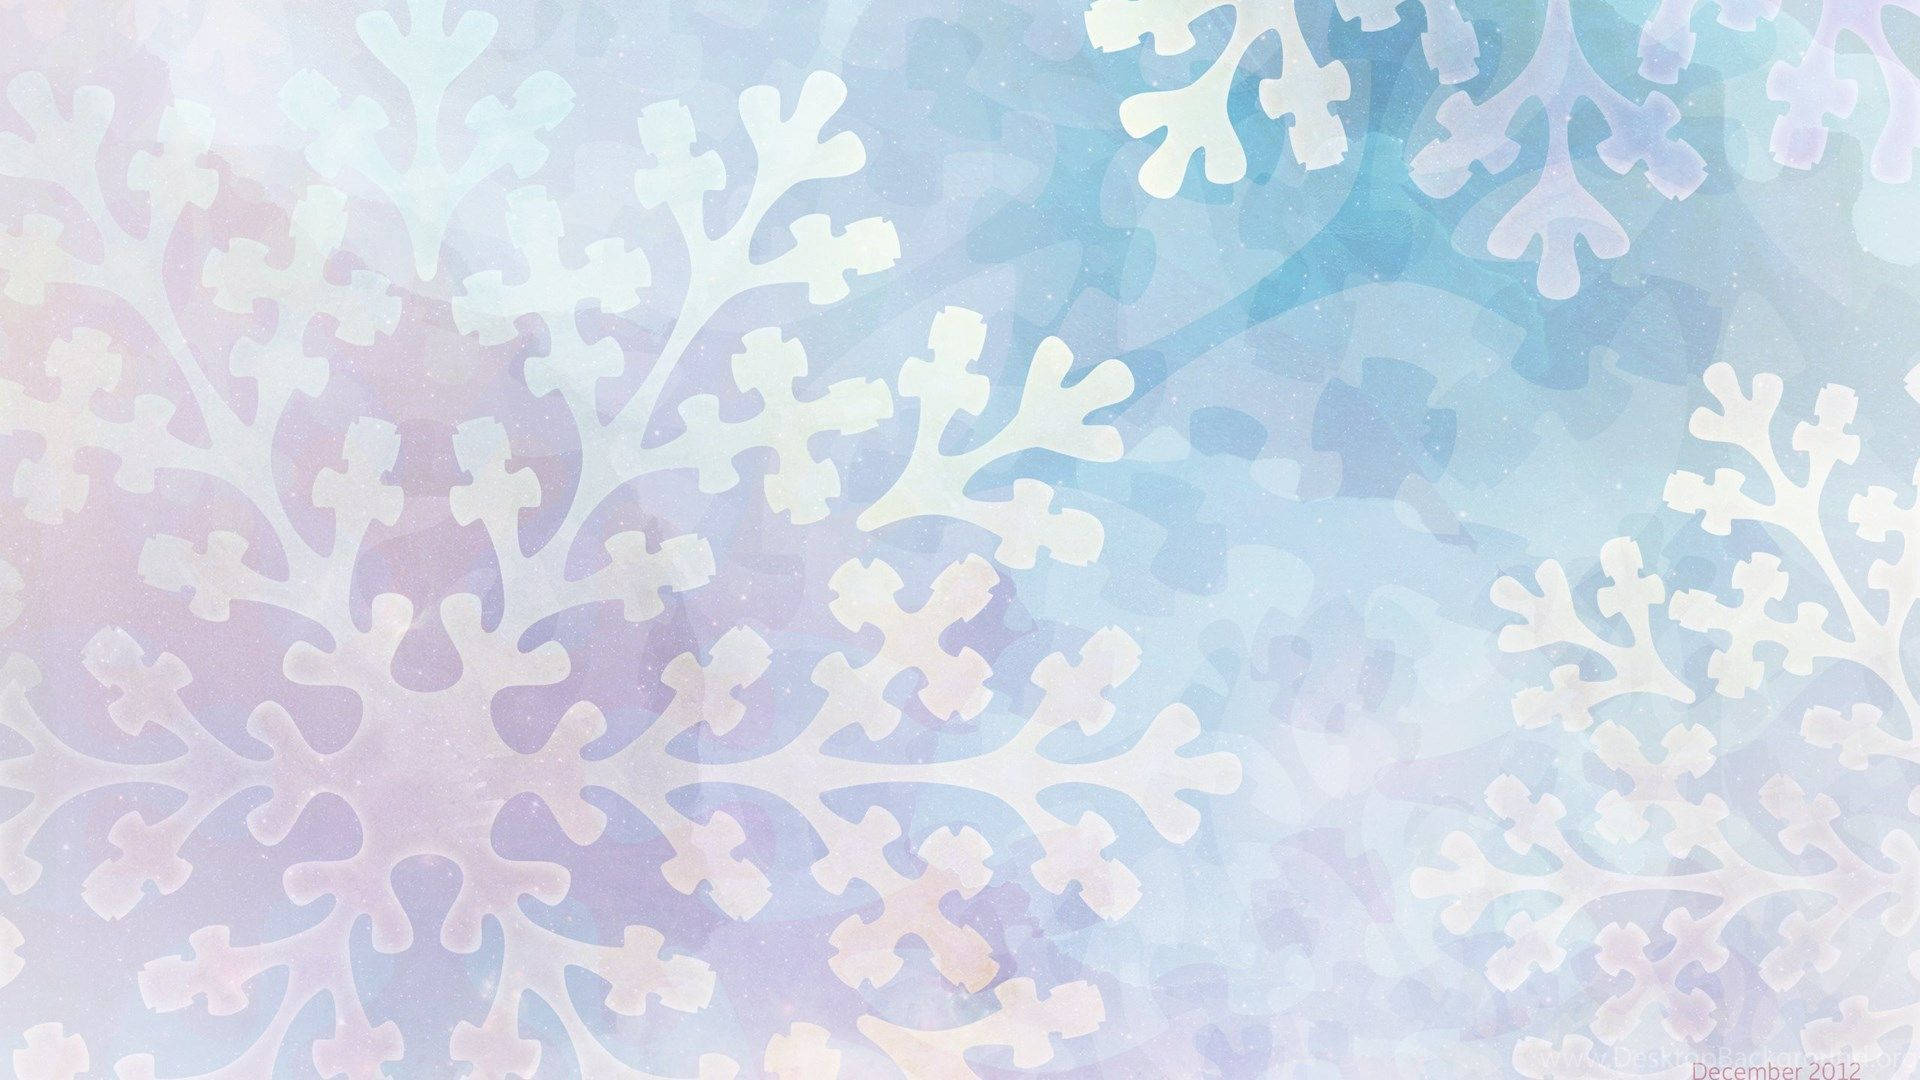 Snowflakes on a soft pastel background - Snowflake